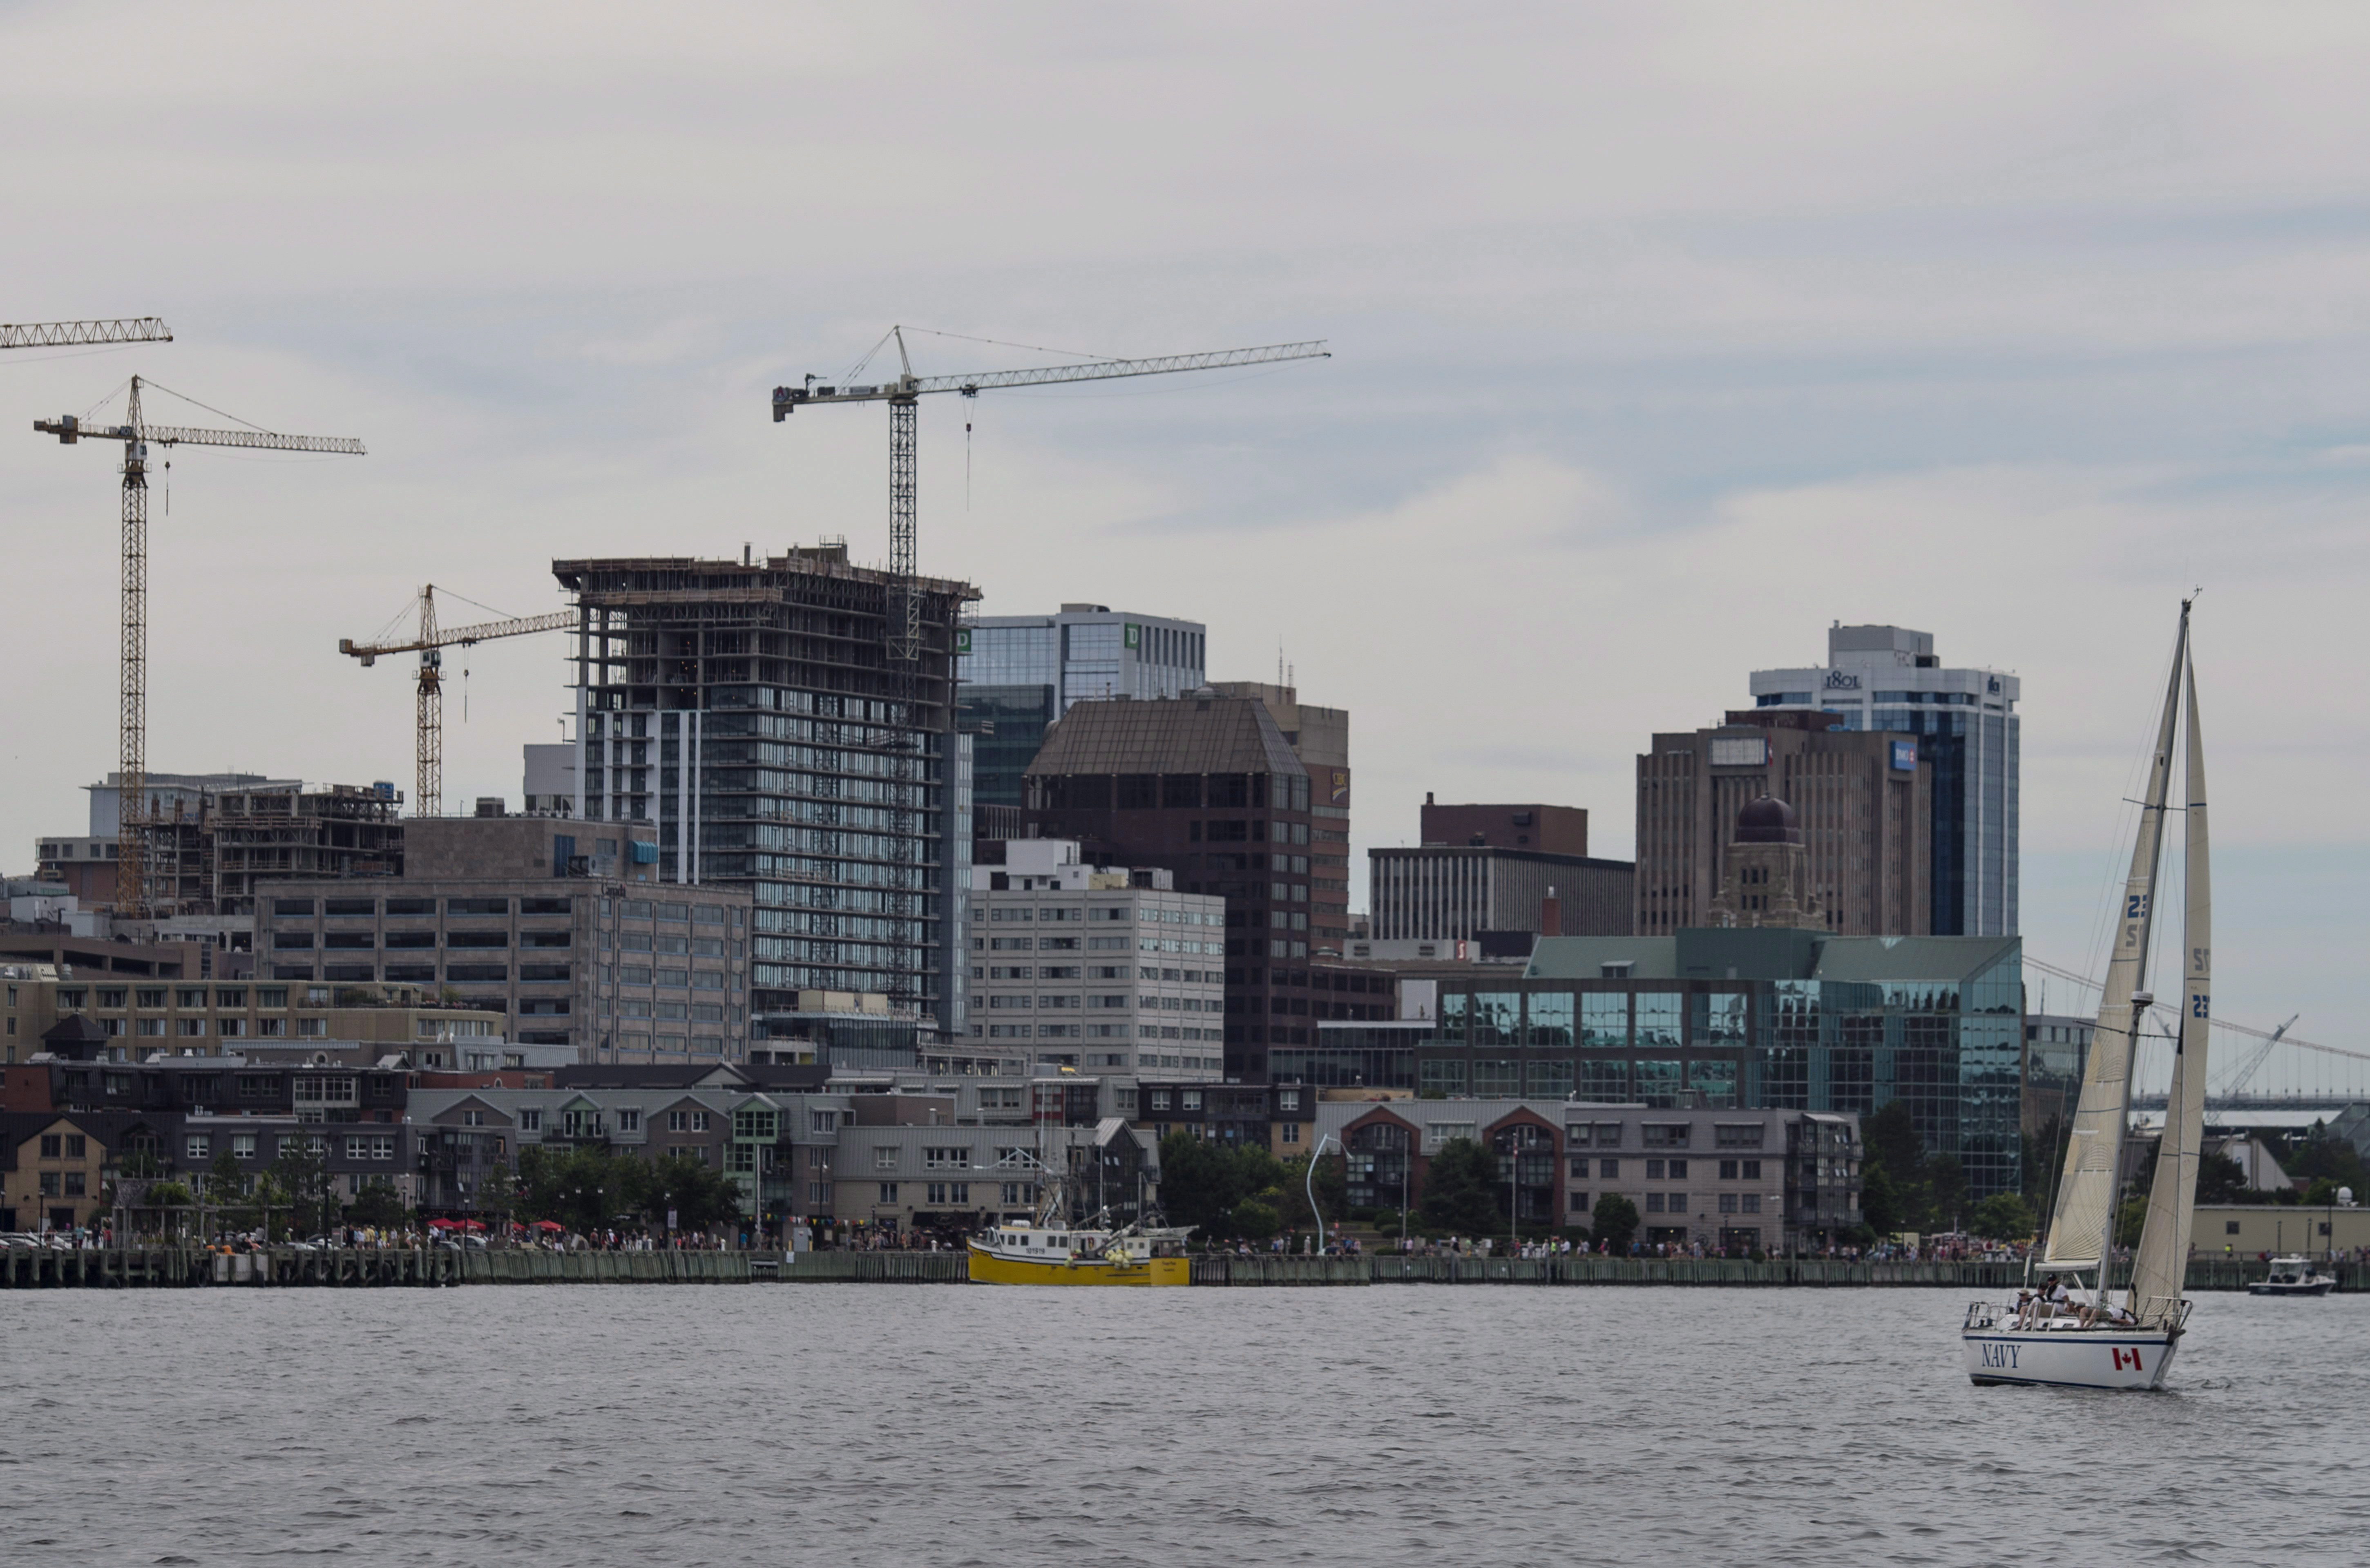 en seilbåt er sett foran Halifax skyline på søndag, juli 31, 2016. CANADIAN PRESS / Darren Calabrese